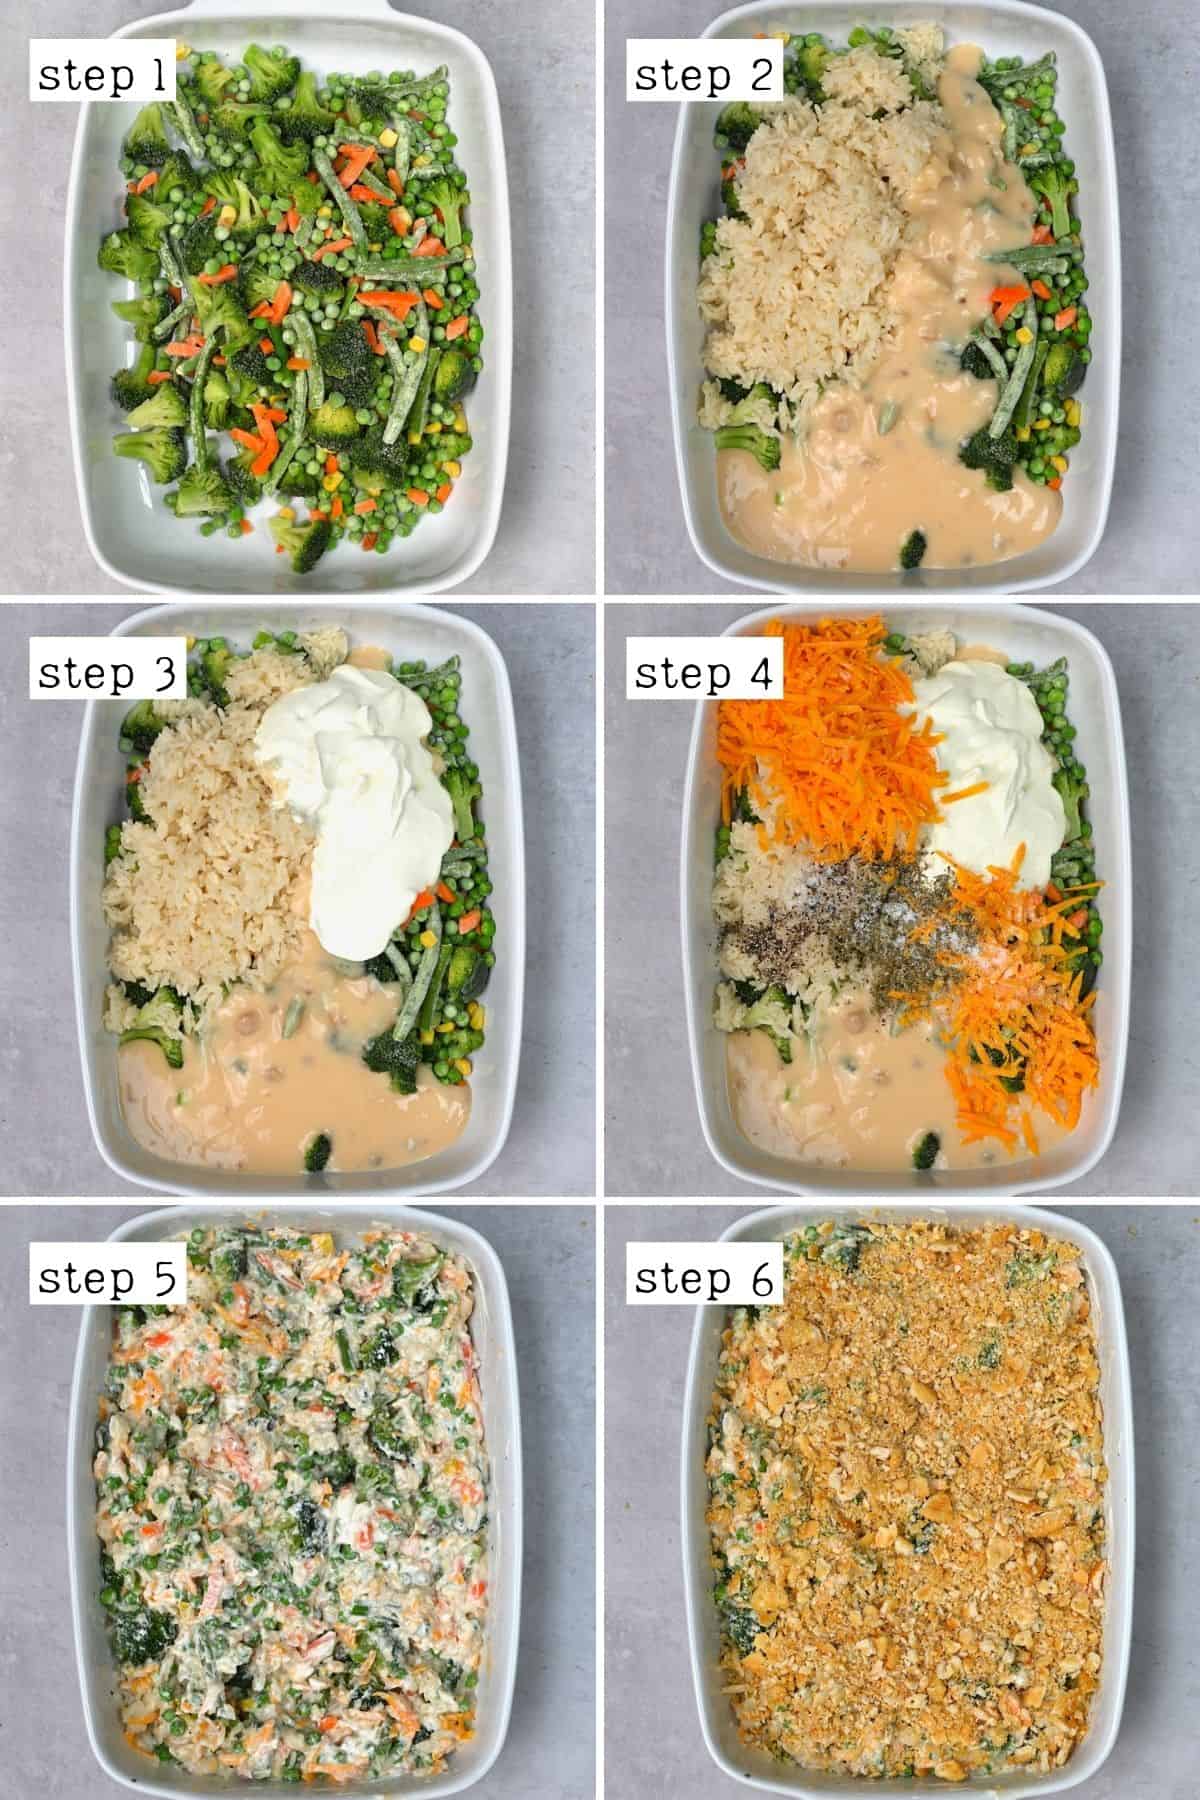 Steps for preparing vegetable casserole